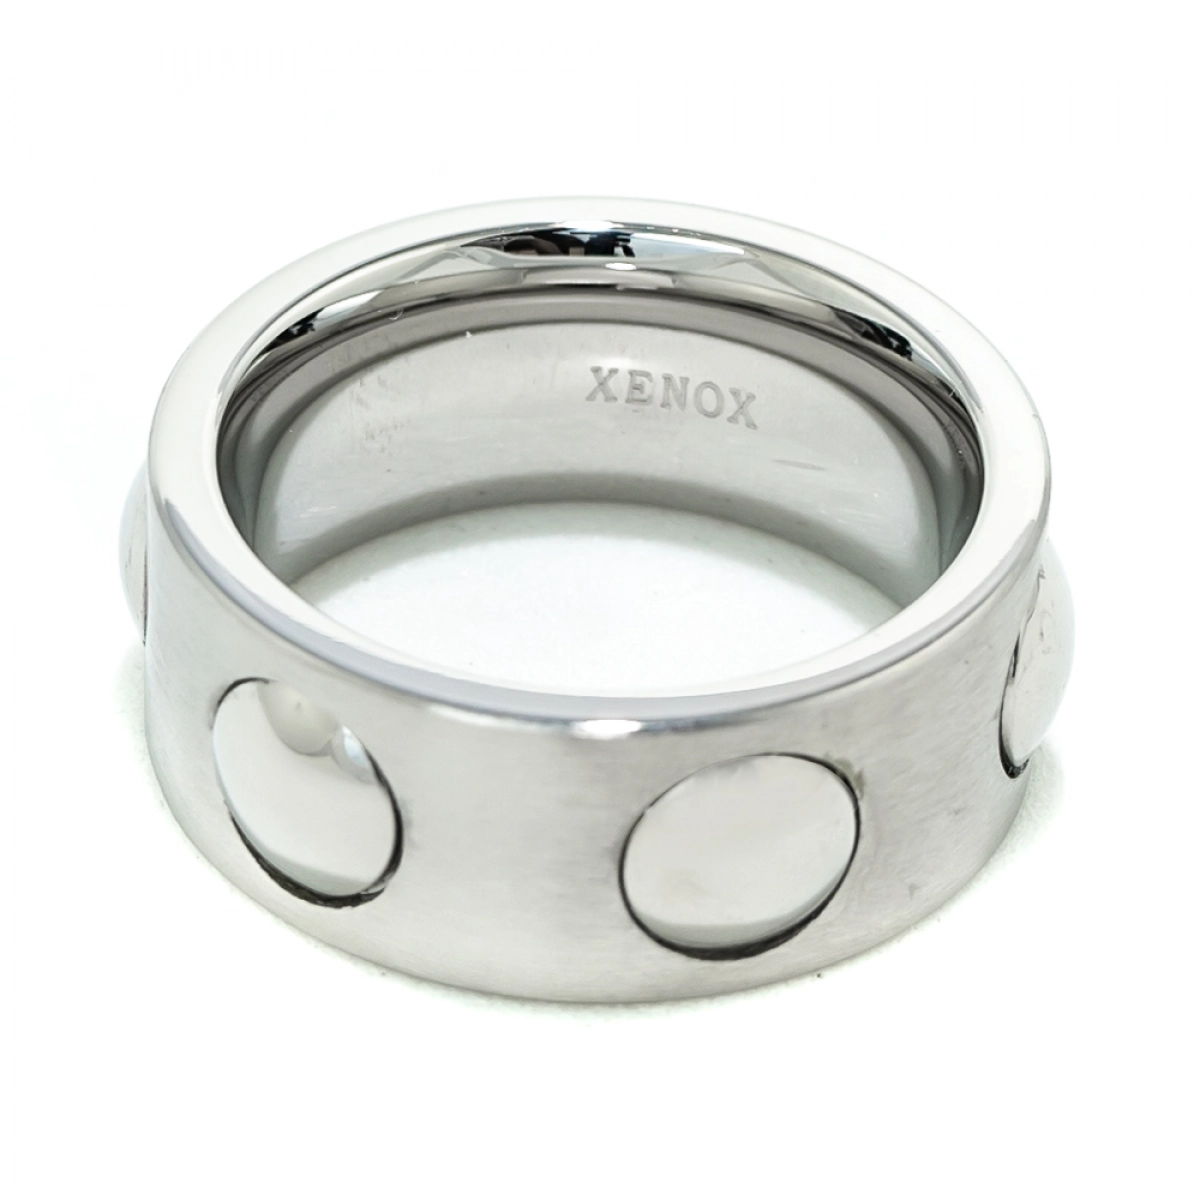 RING WOMAN X1560-56 Xenox